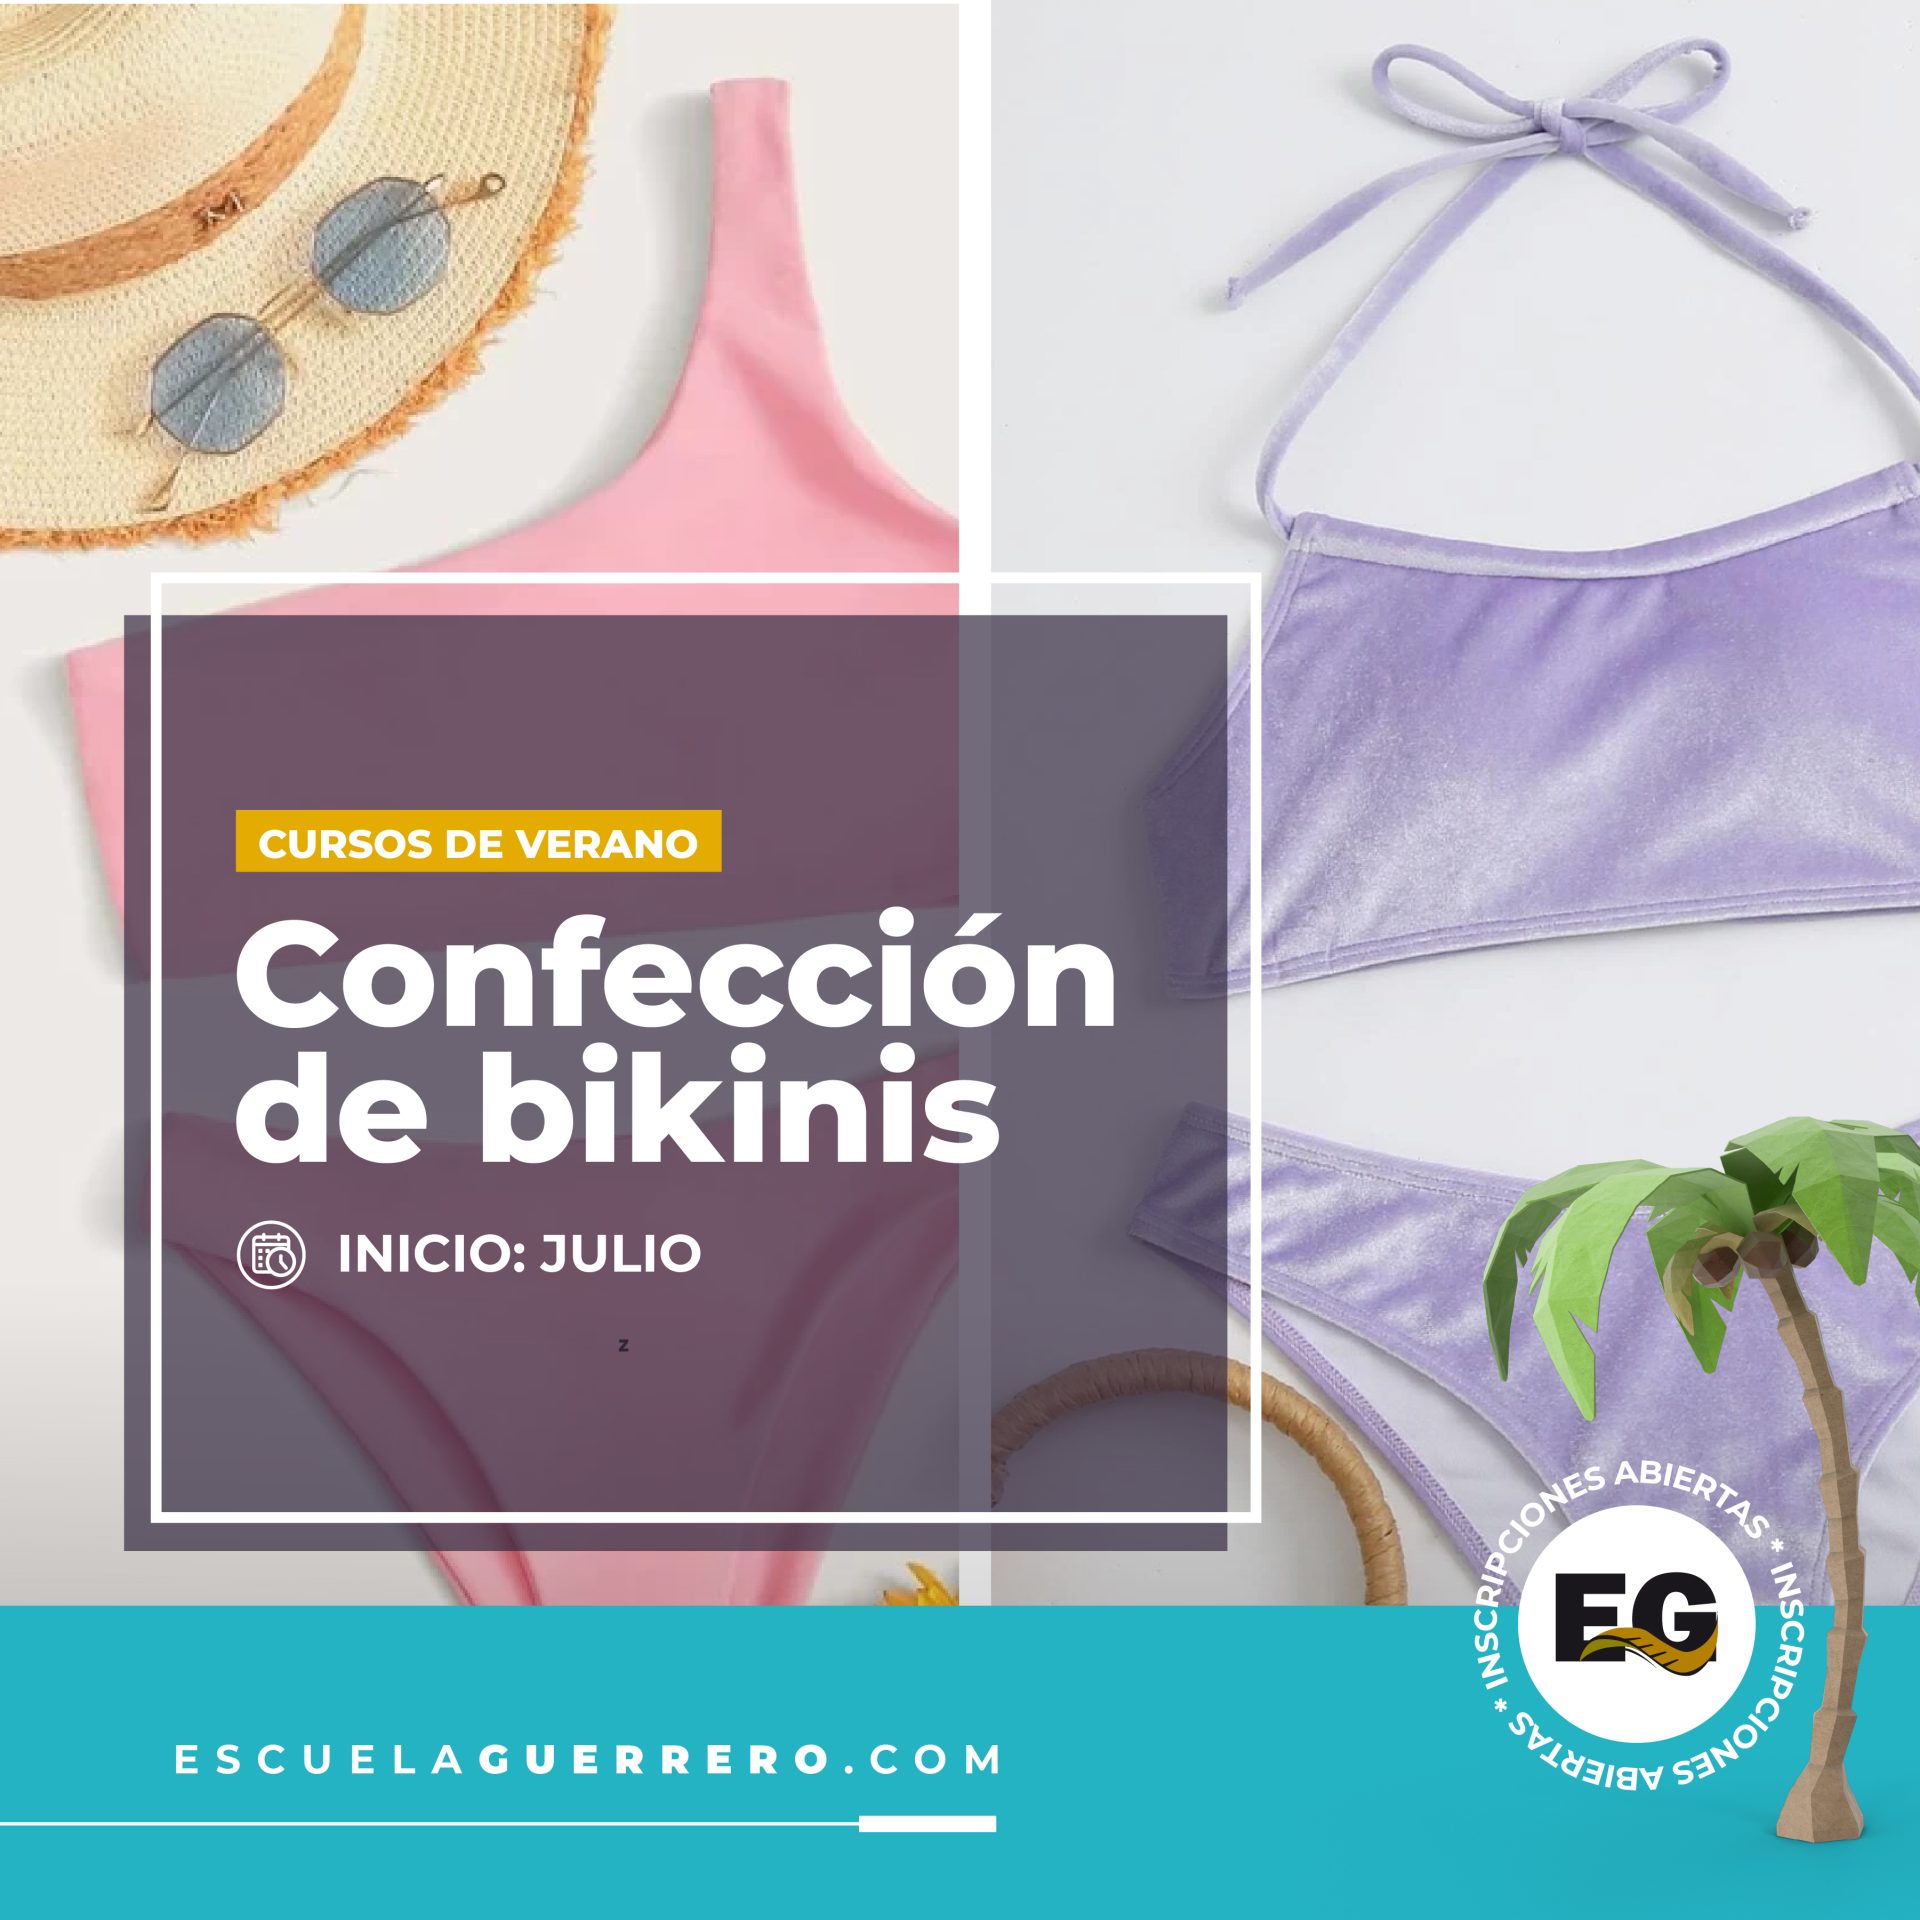 confeccion de bikinis